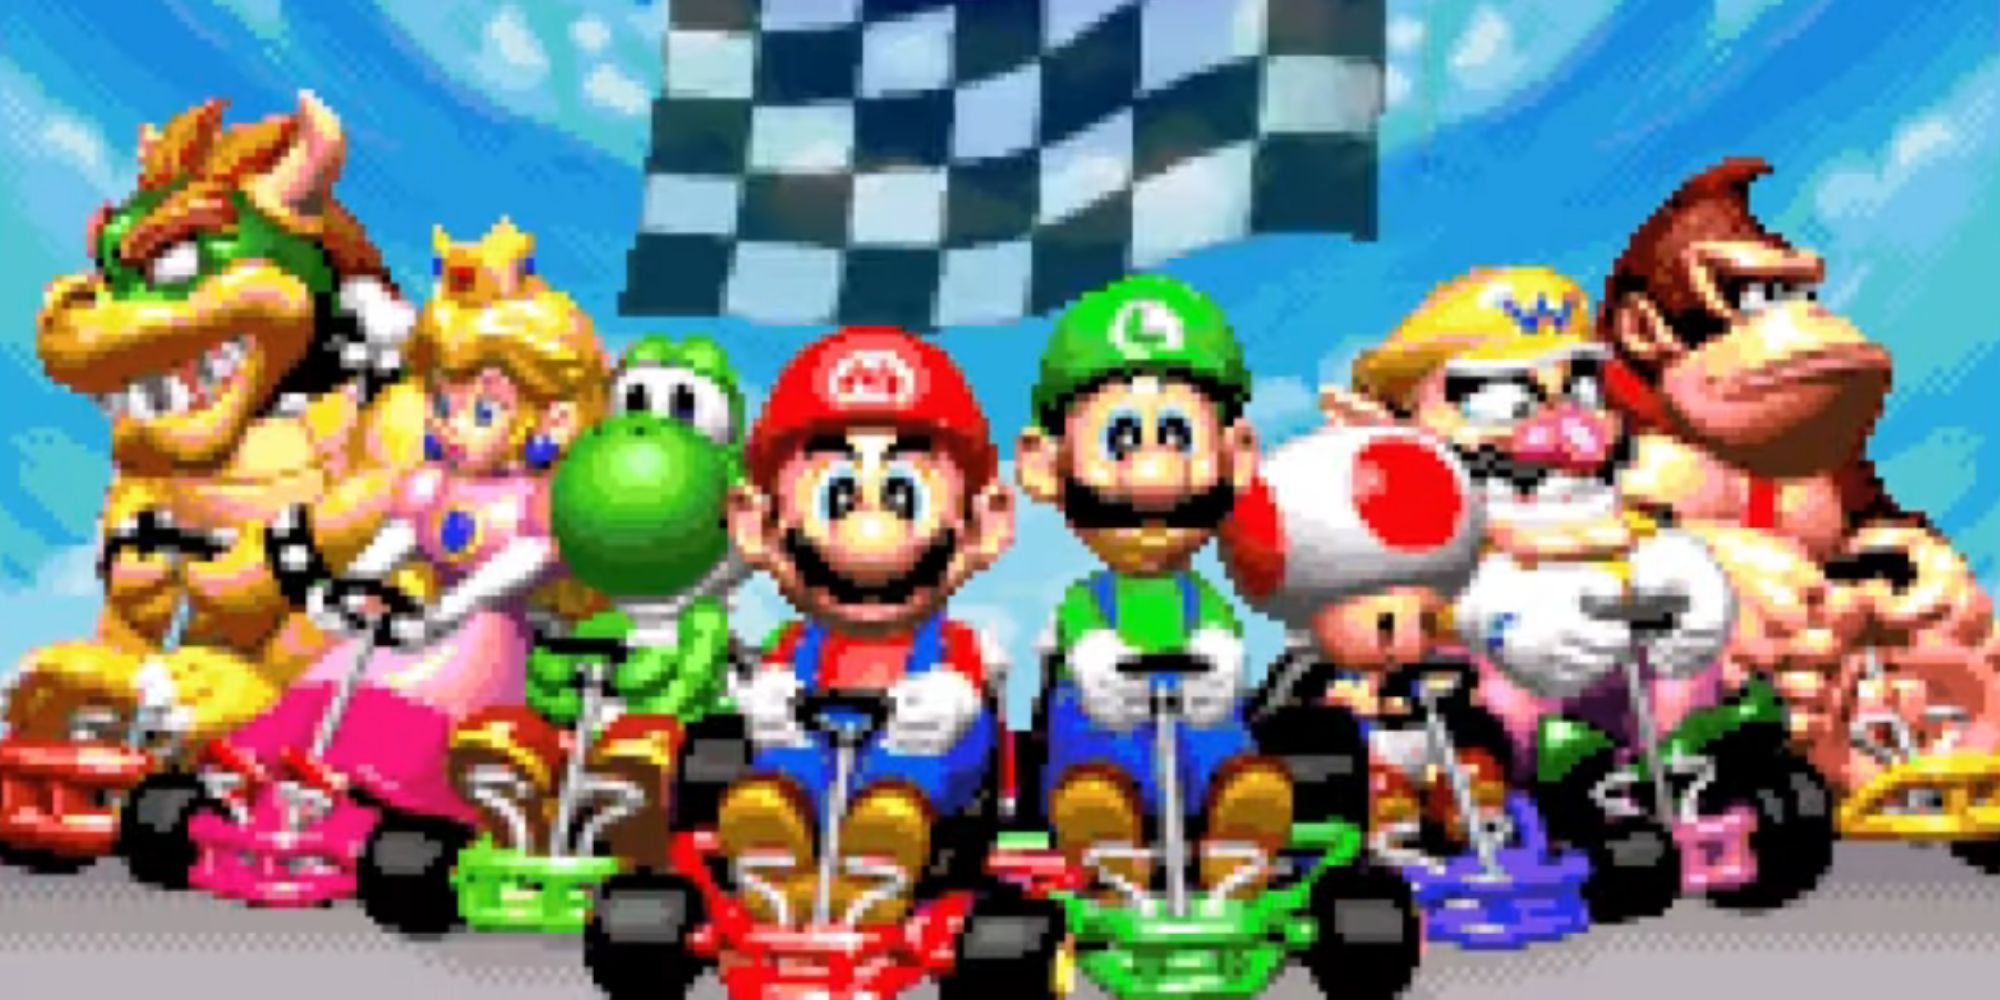 Bowser, Peach, Yoshi, Mario, Luigi, Toad, Wario, and Donkey Kong sit on karts under a checkered flag in Mario Kart Super Circuit